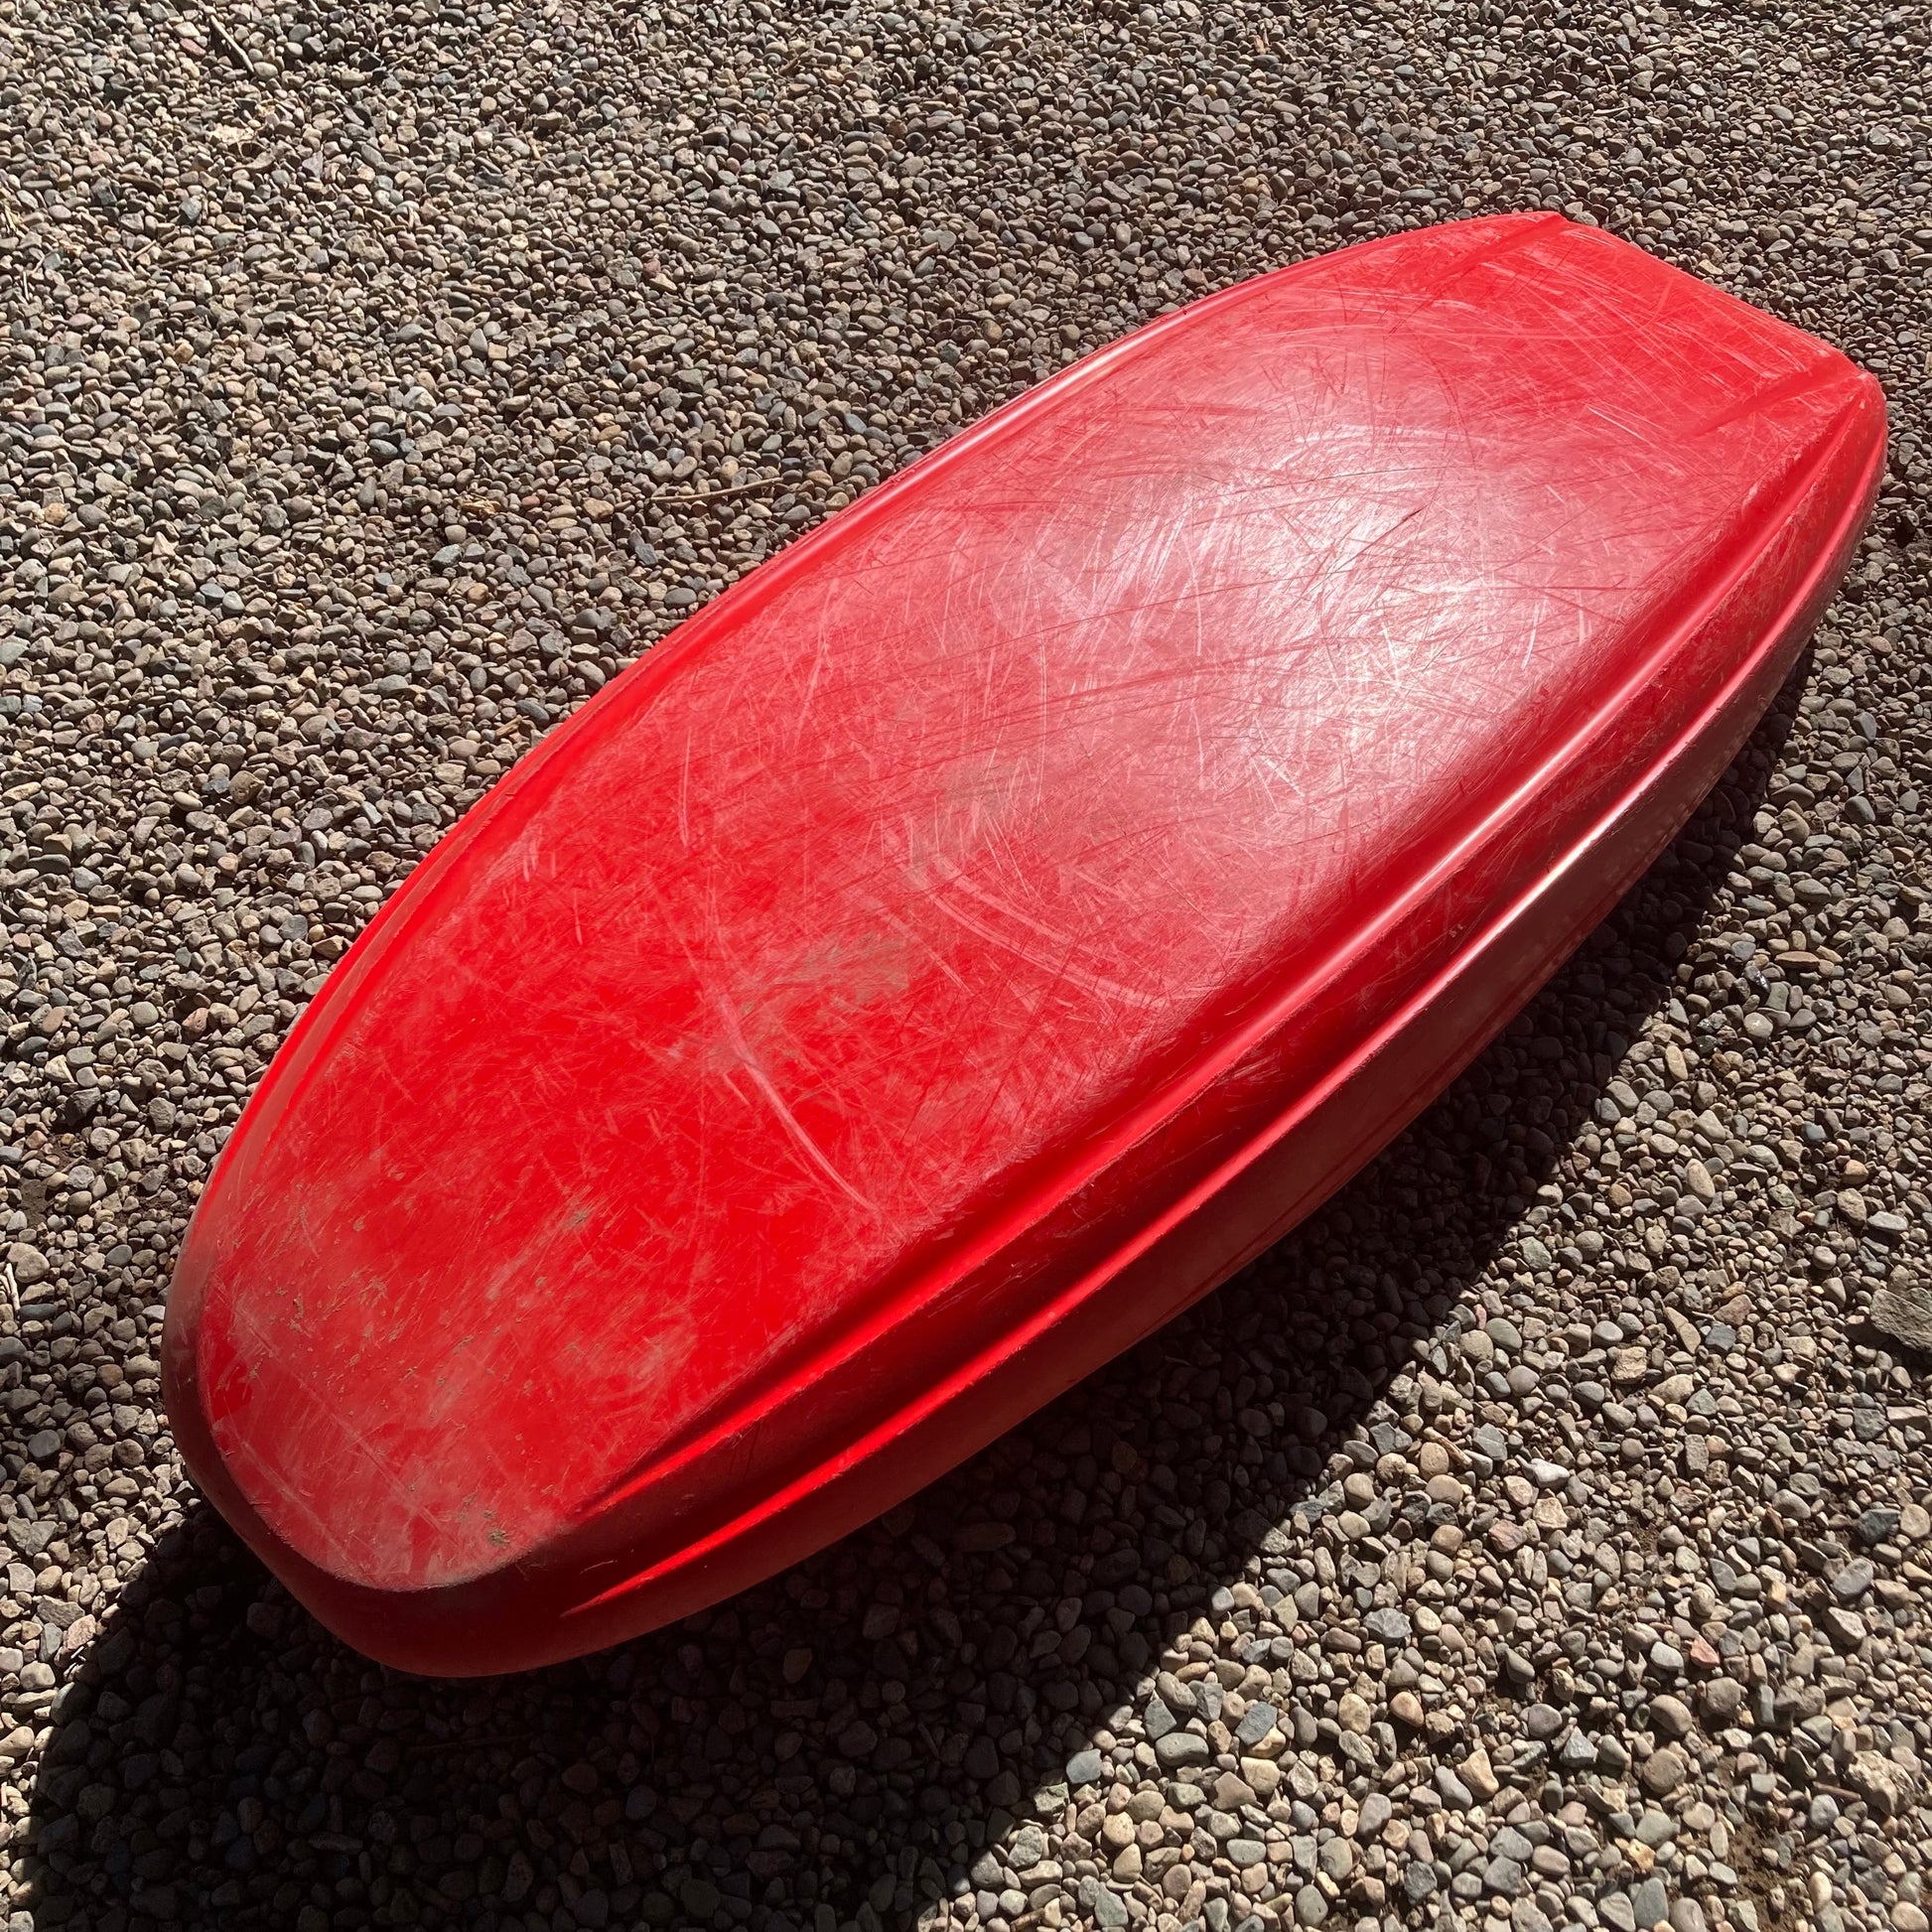 A Demo Rockstar V MD plastic boat laying on the ground. Brand: Jackson Kayak.